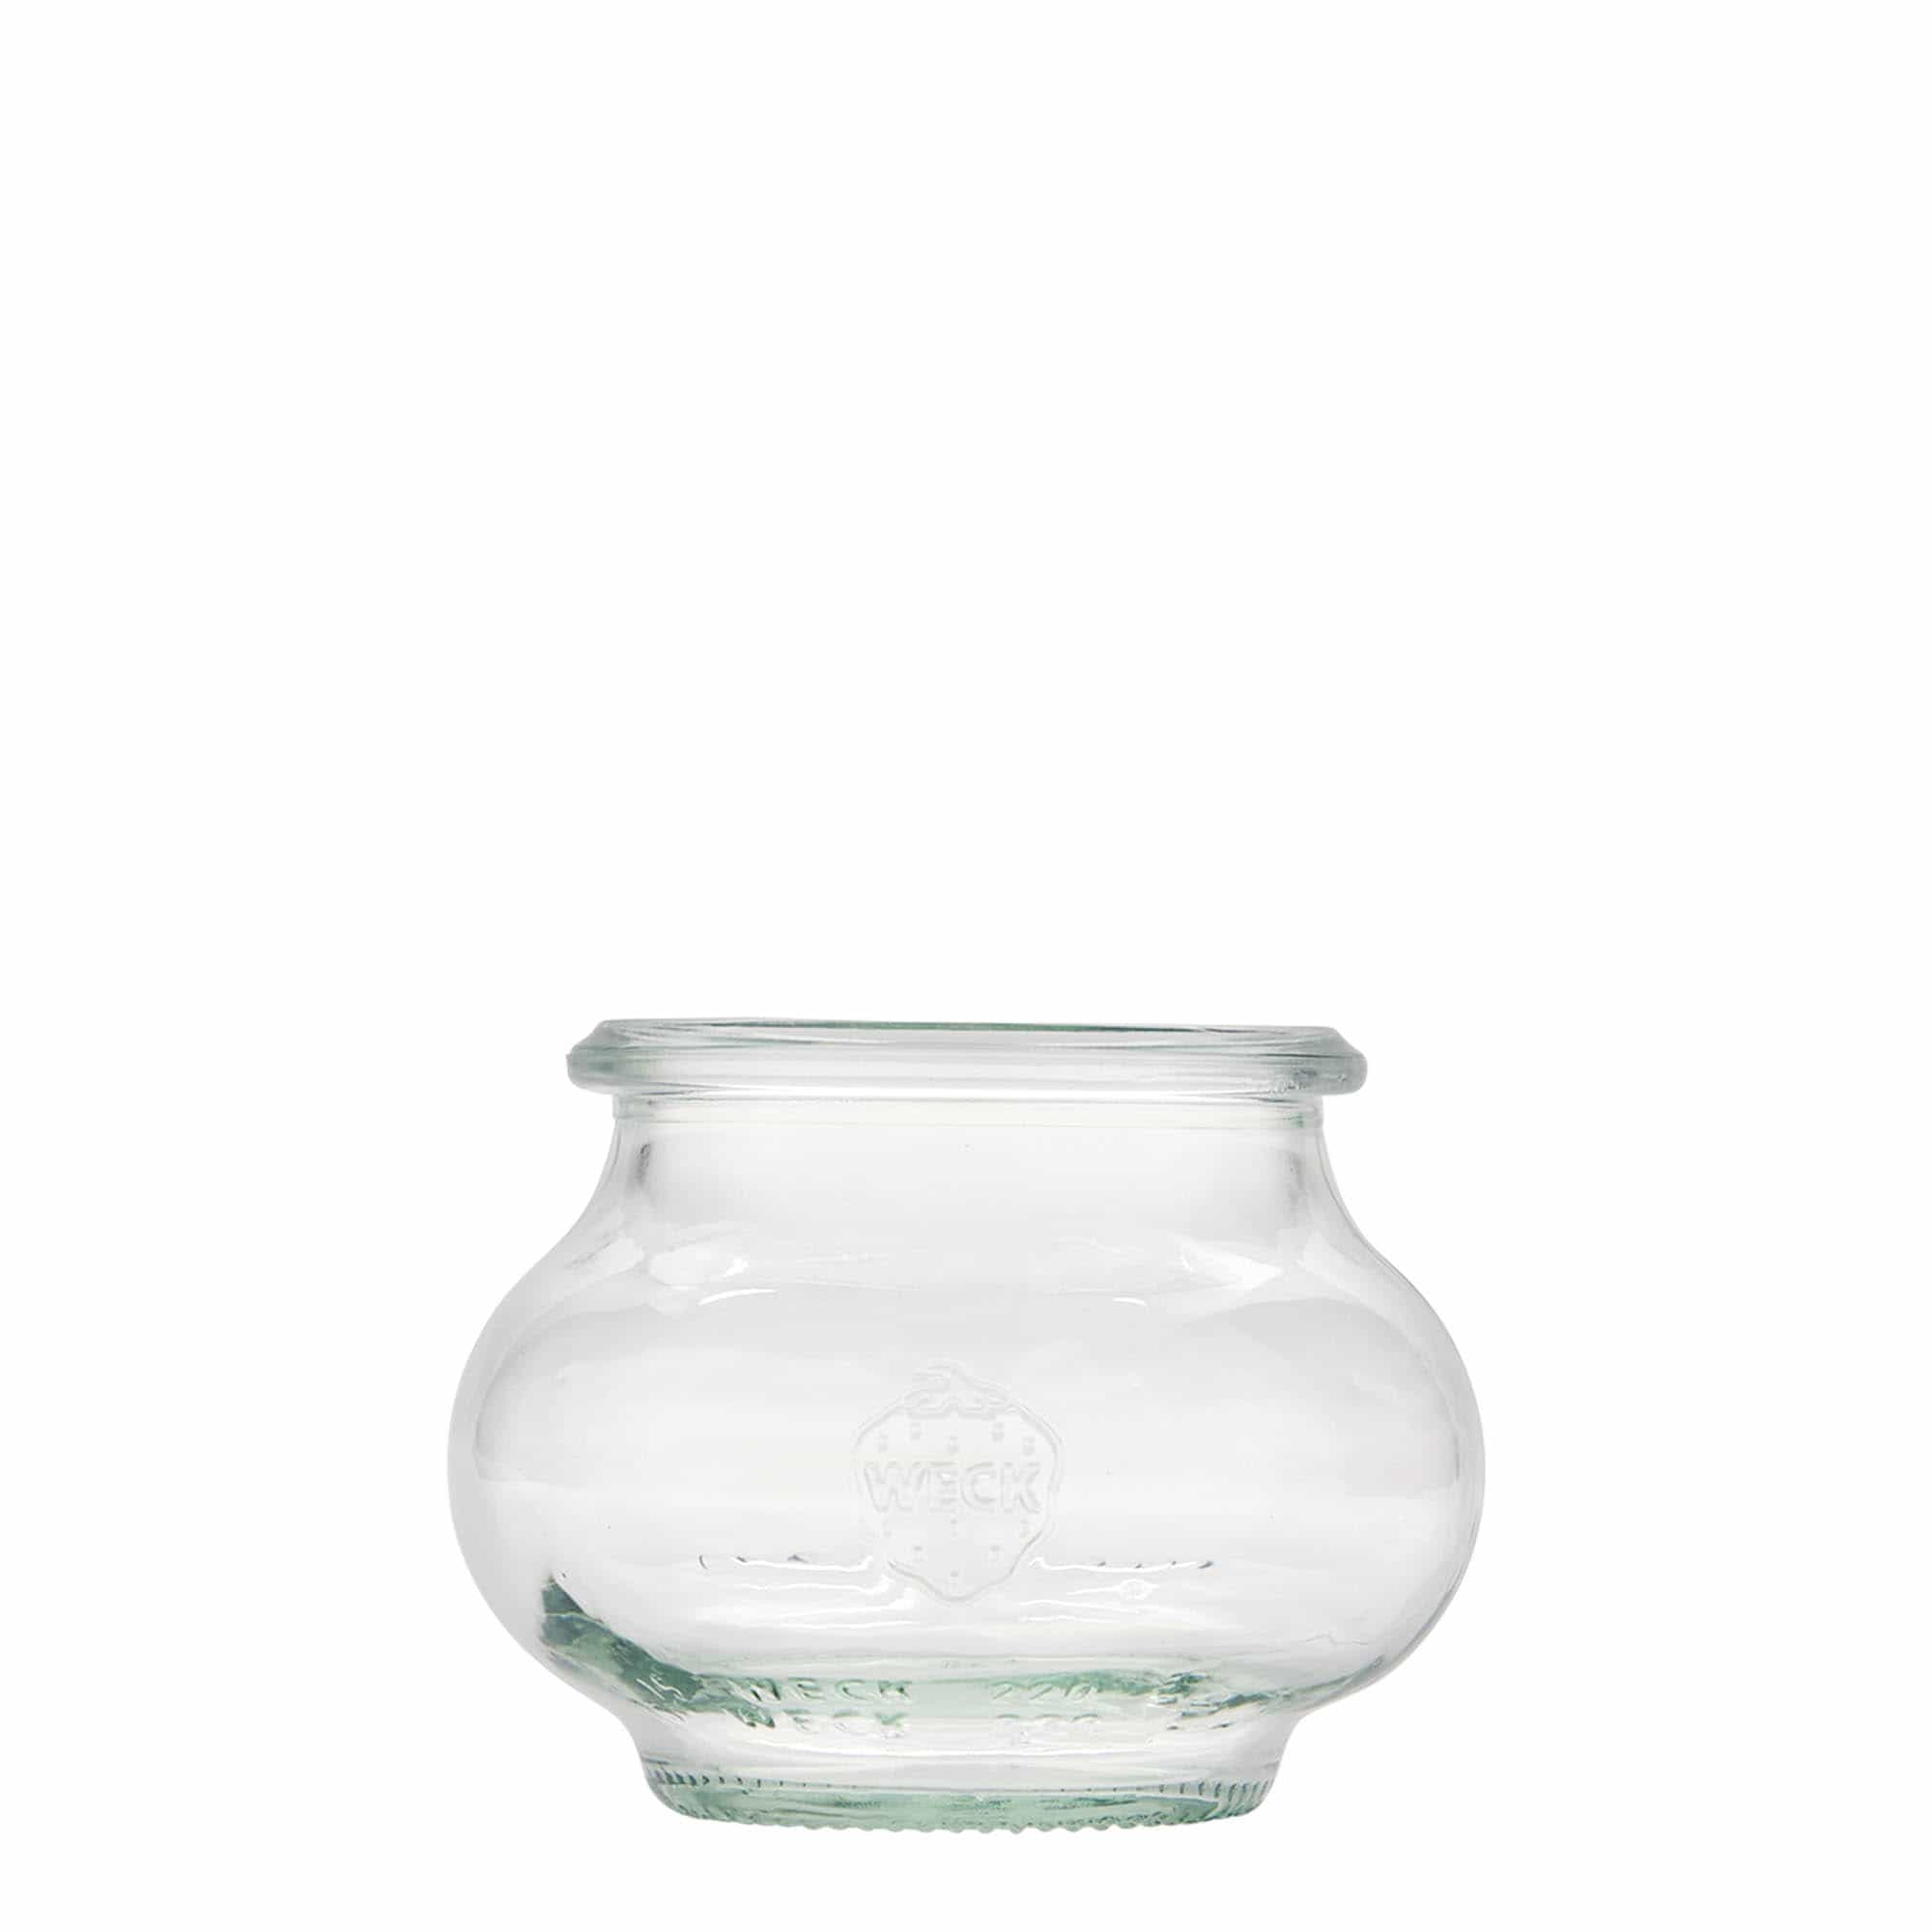 220 ml WECK decorative jar, closure: round rim